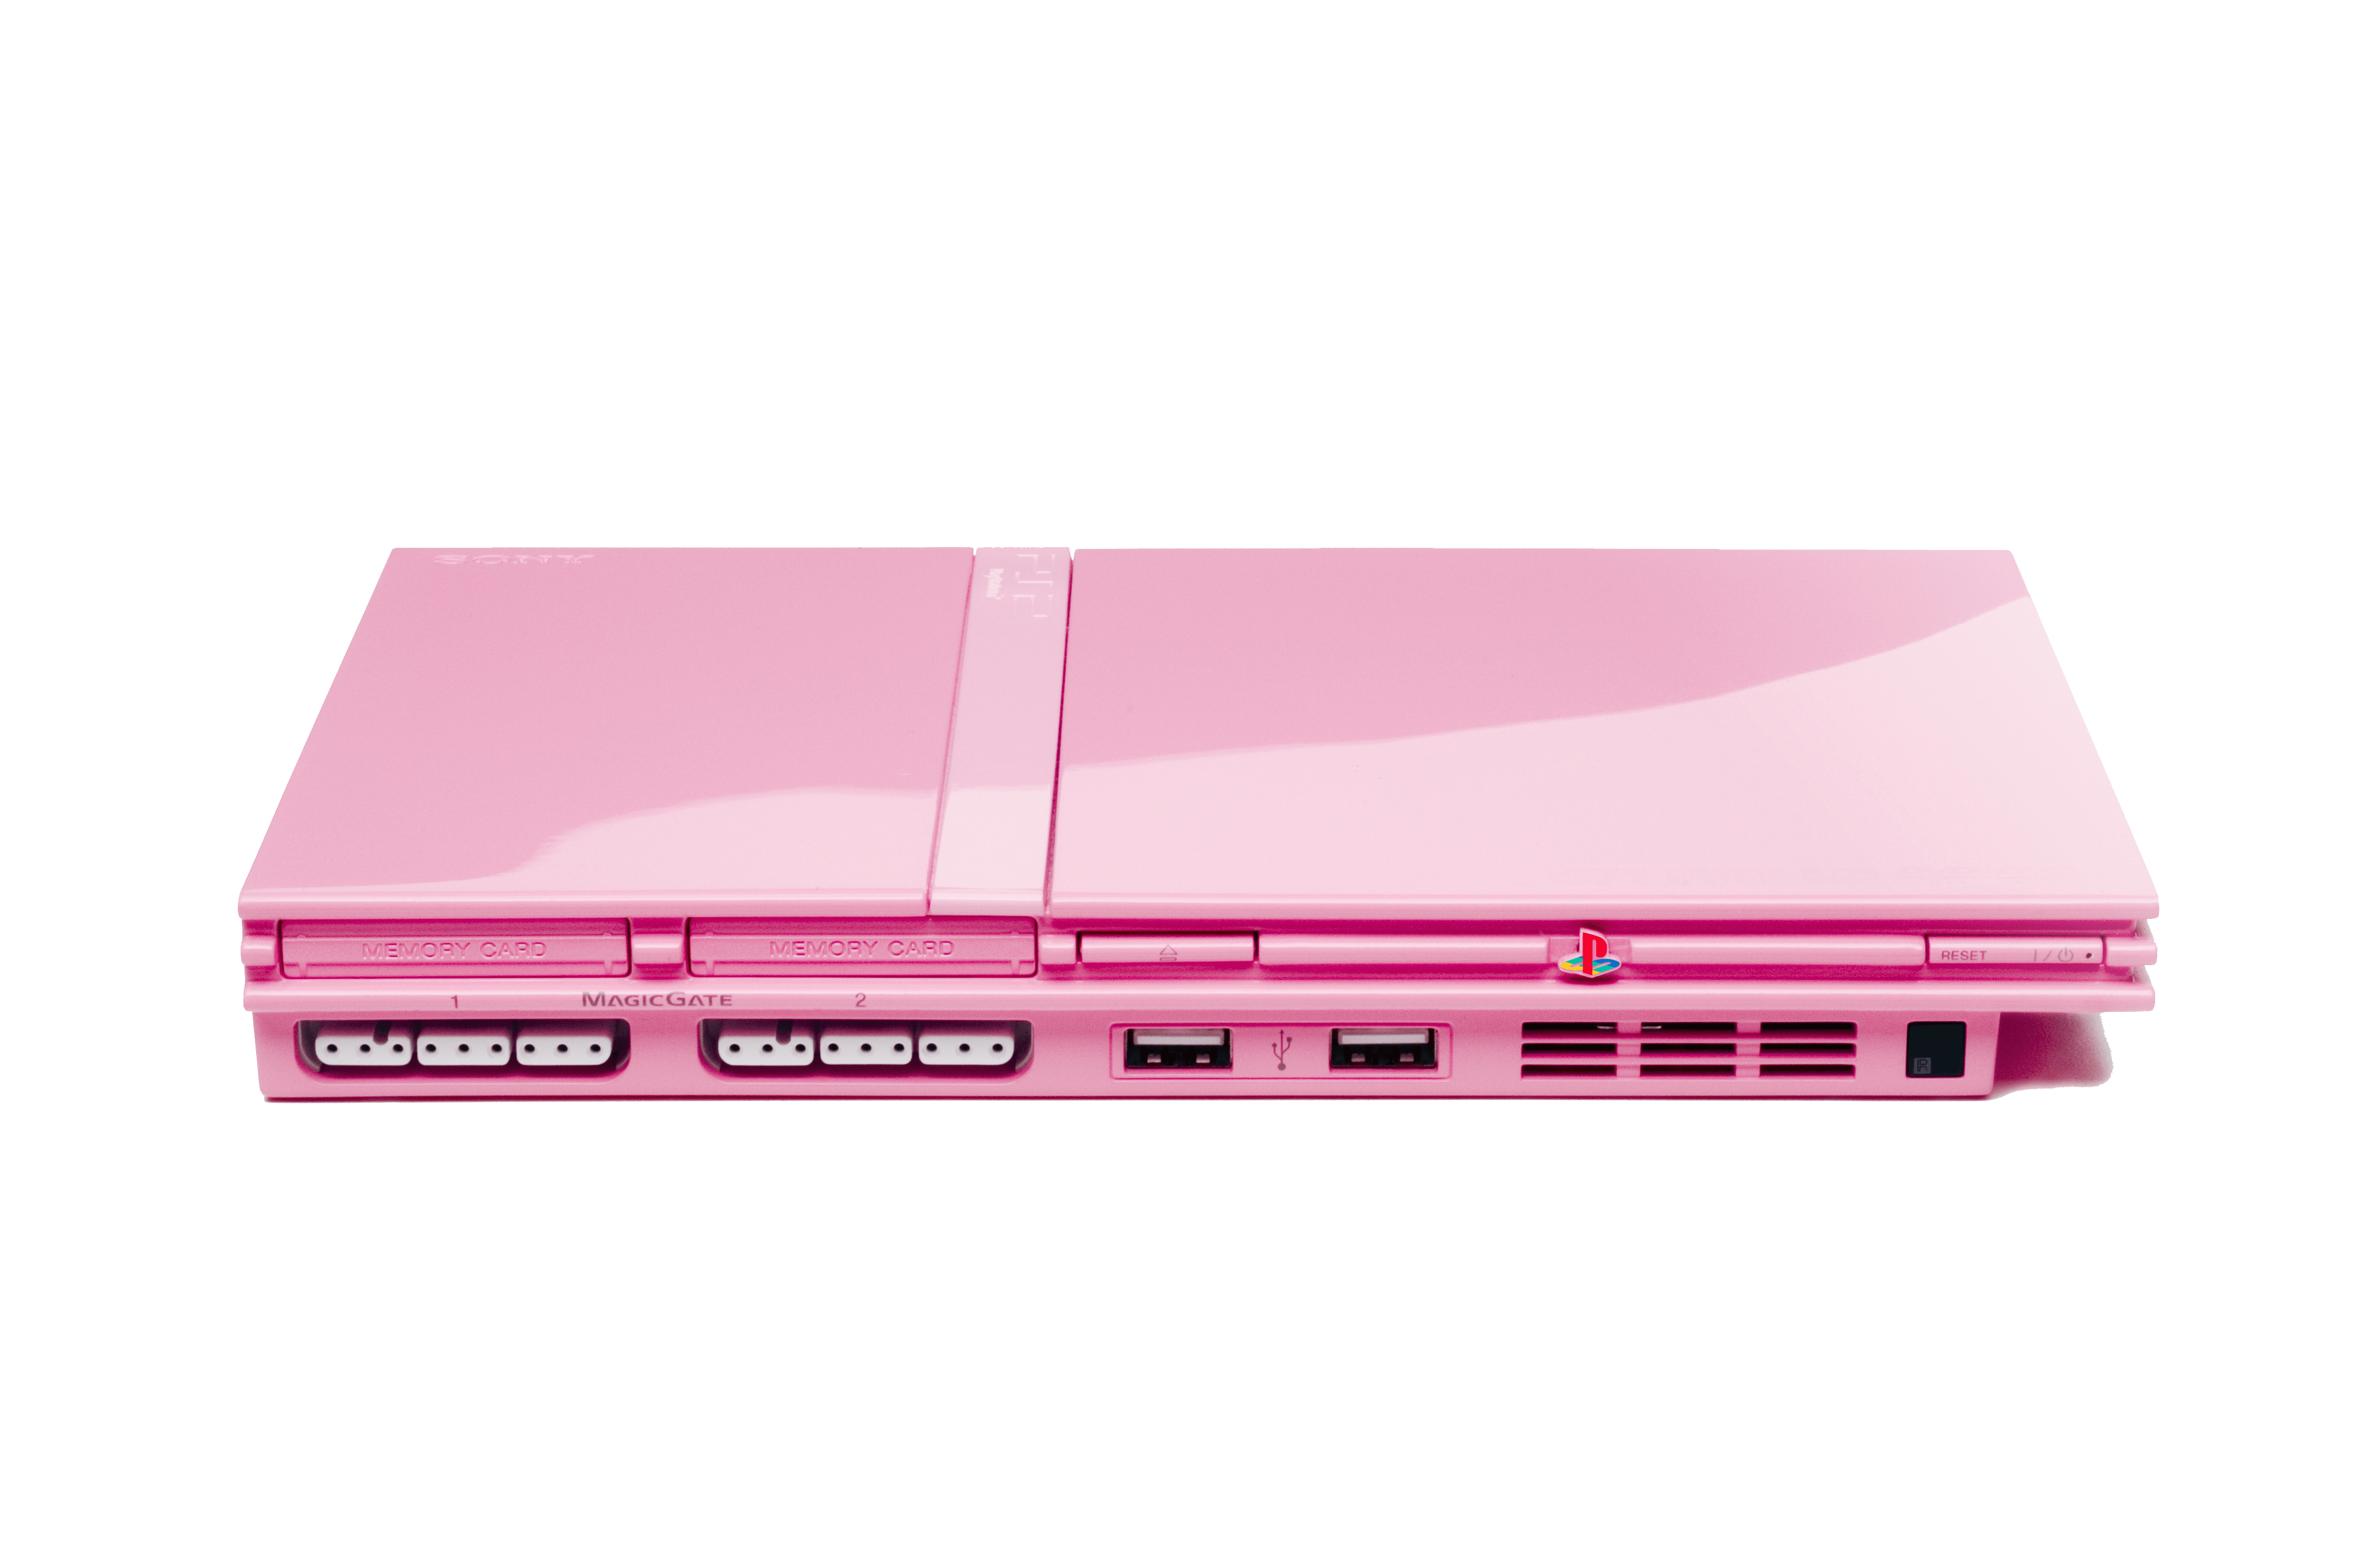 Розовым 2 разбор. Sony PLAYSTATION 2 Slim Pink. Sony ps2 Slim Pink. Sony ps2 Pink. Sony PS 2 розовая.